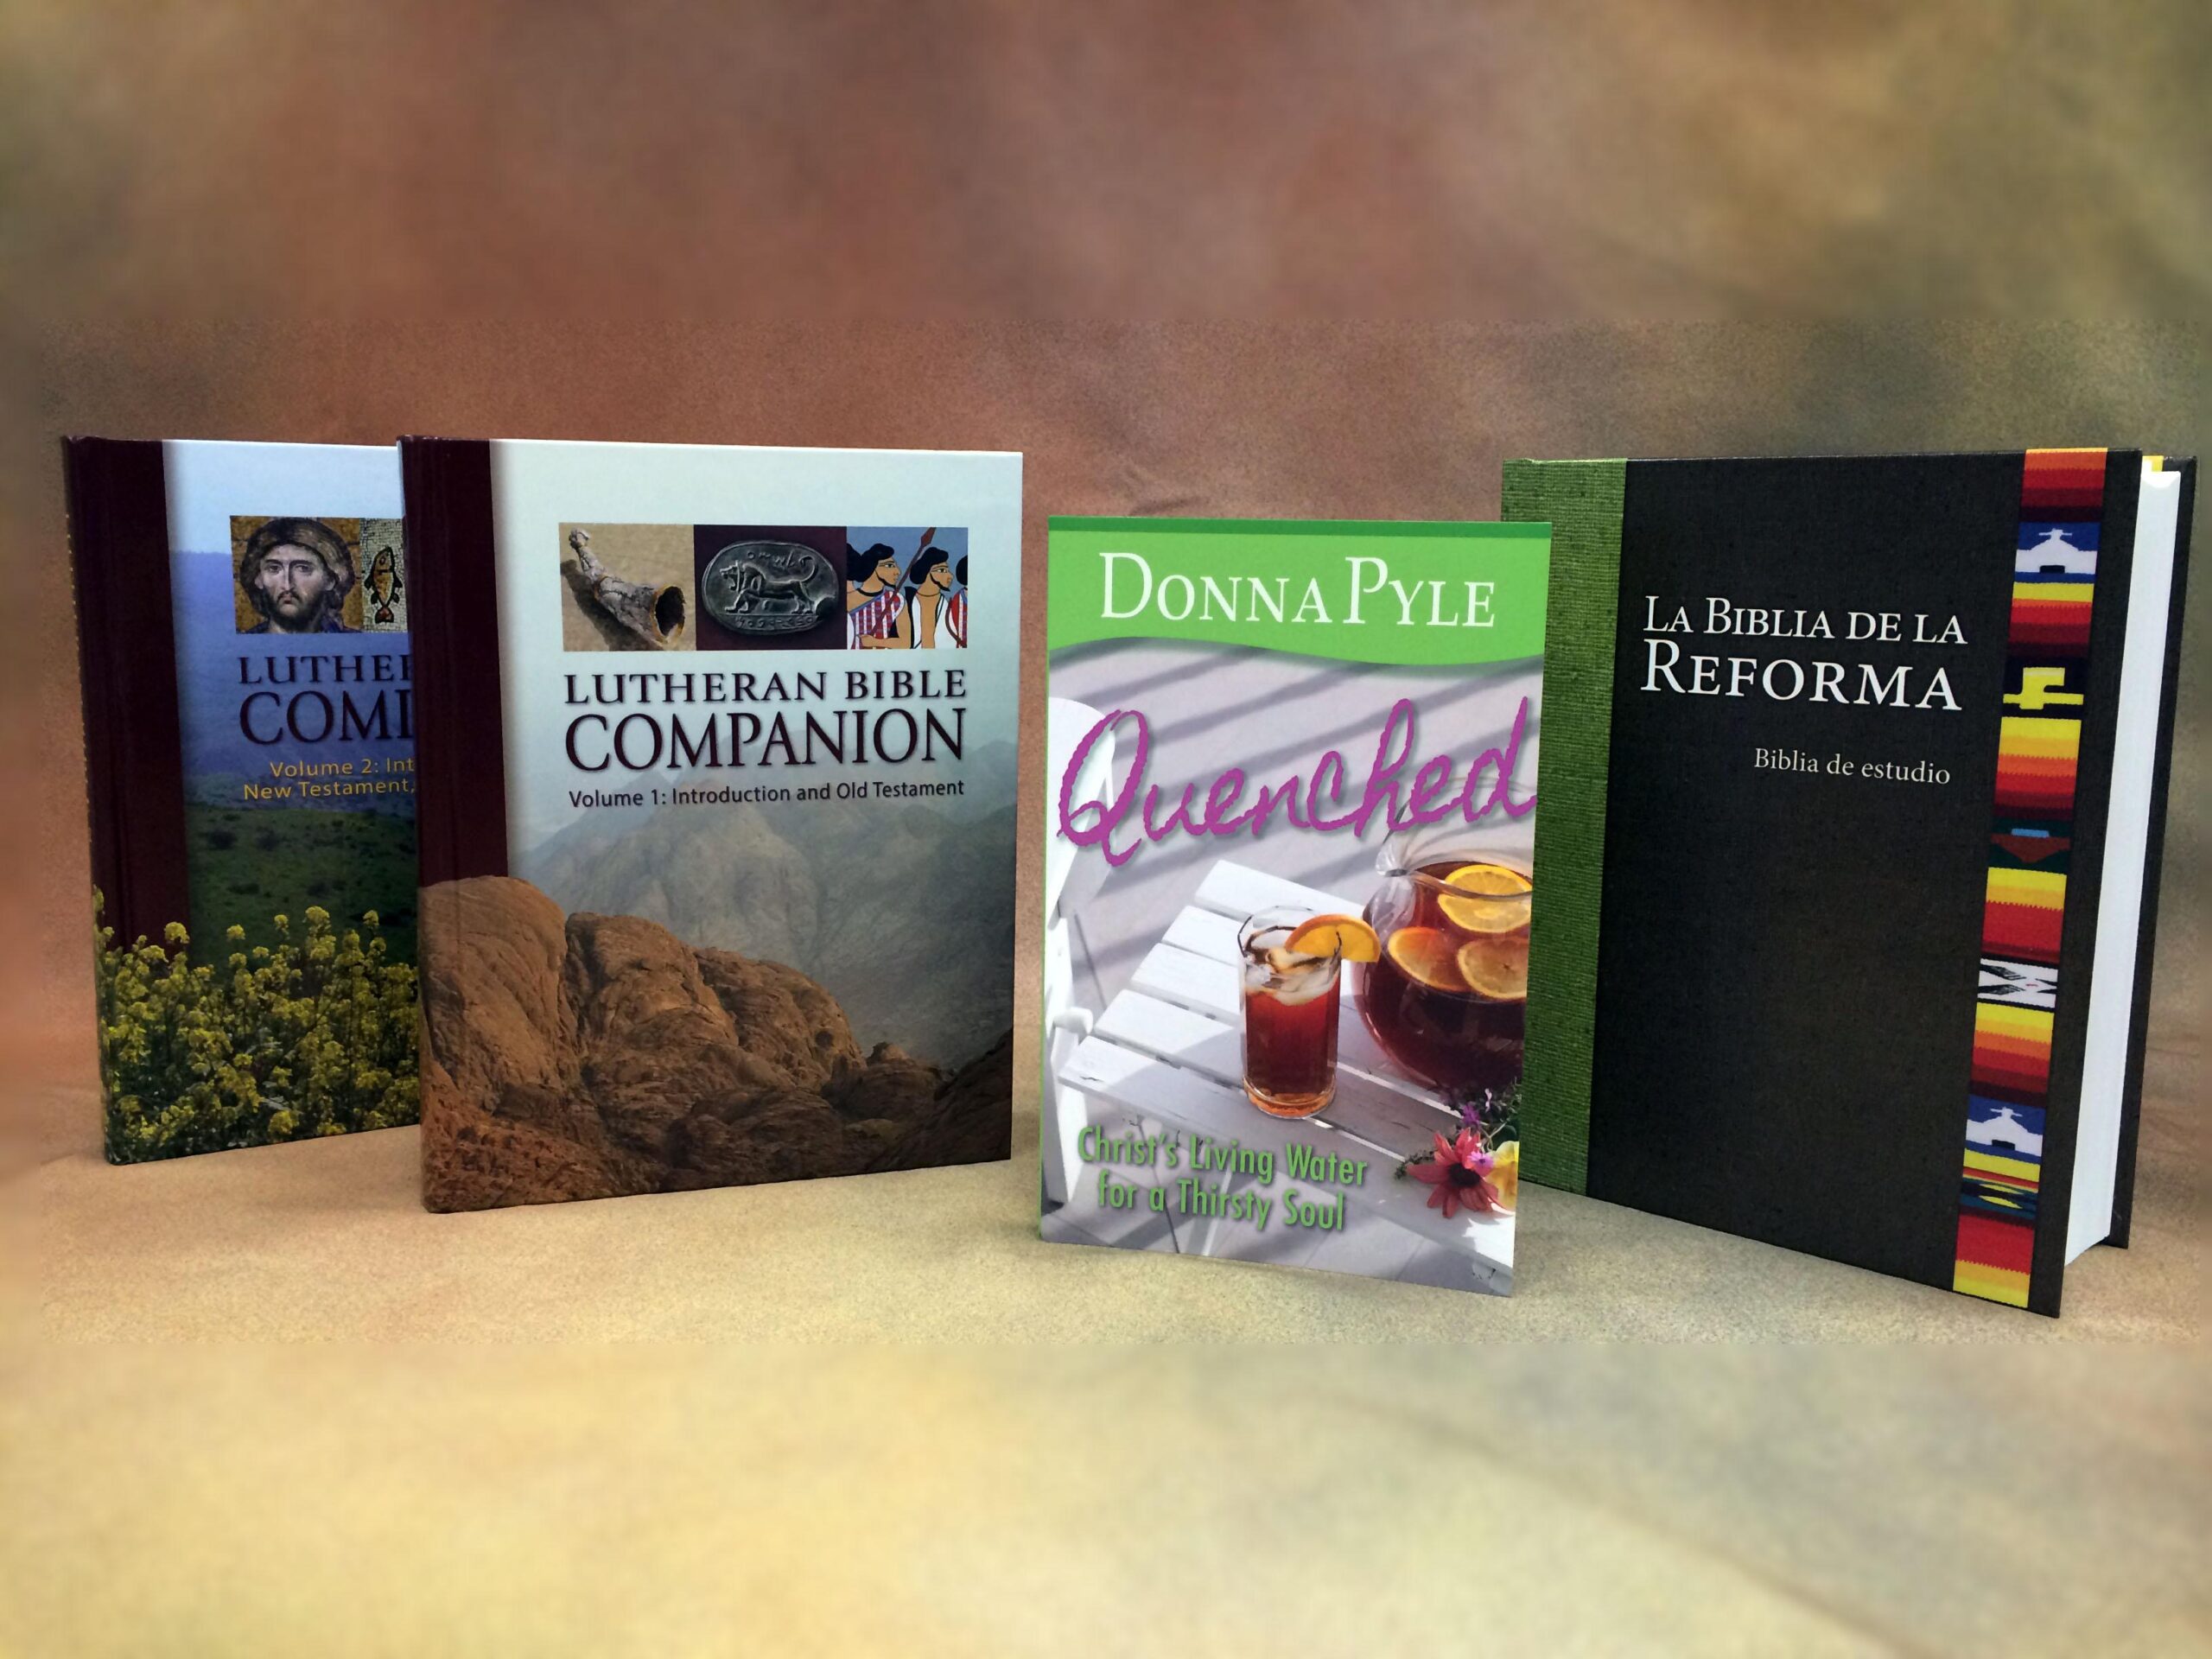 Lutheran Bible Companion, La Biblia de la Reforma, Quenched Receive Industry Recognition